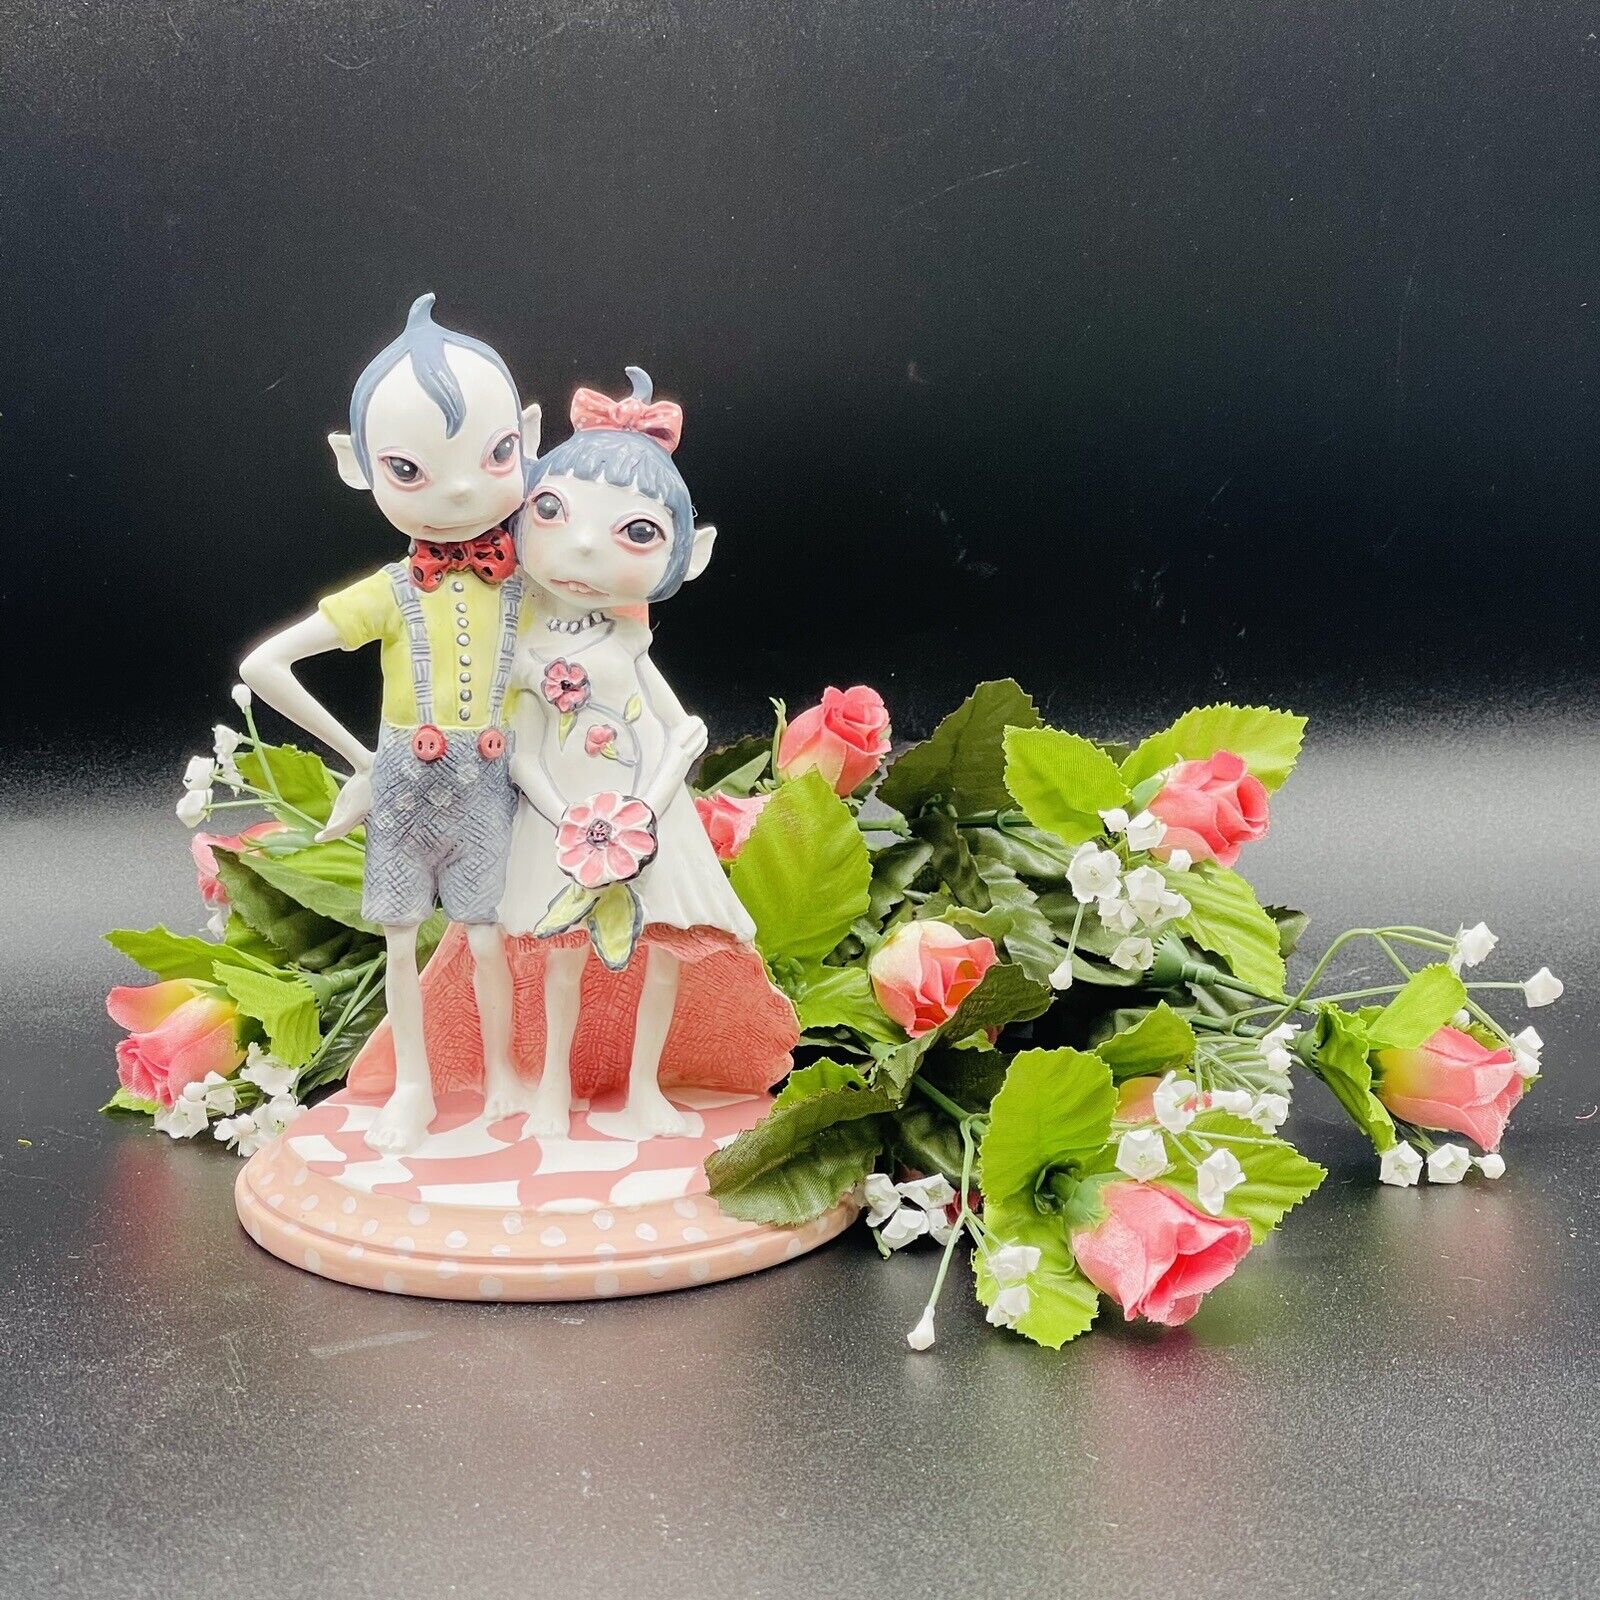 Love & Kishes Freeklings Felix & Petunia Wedding Cake Topper Figurine 7” Tall *